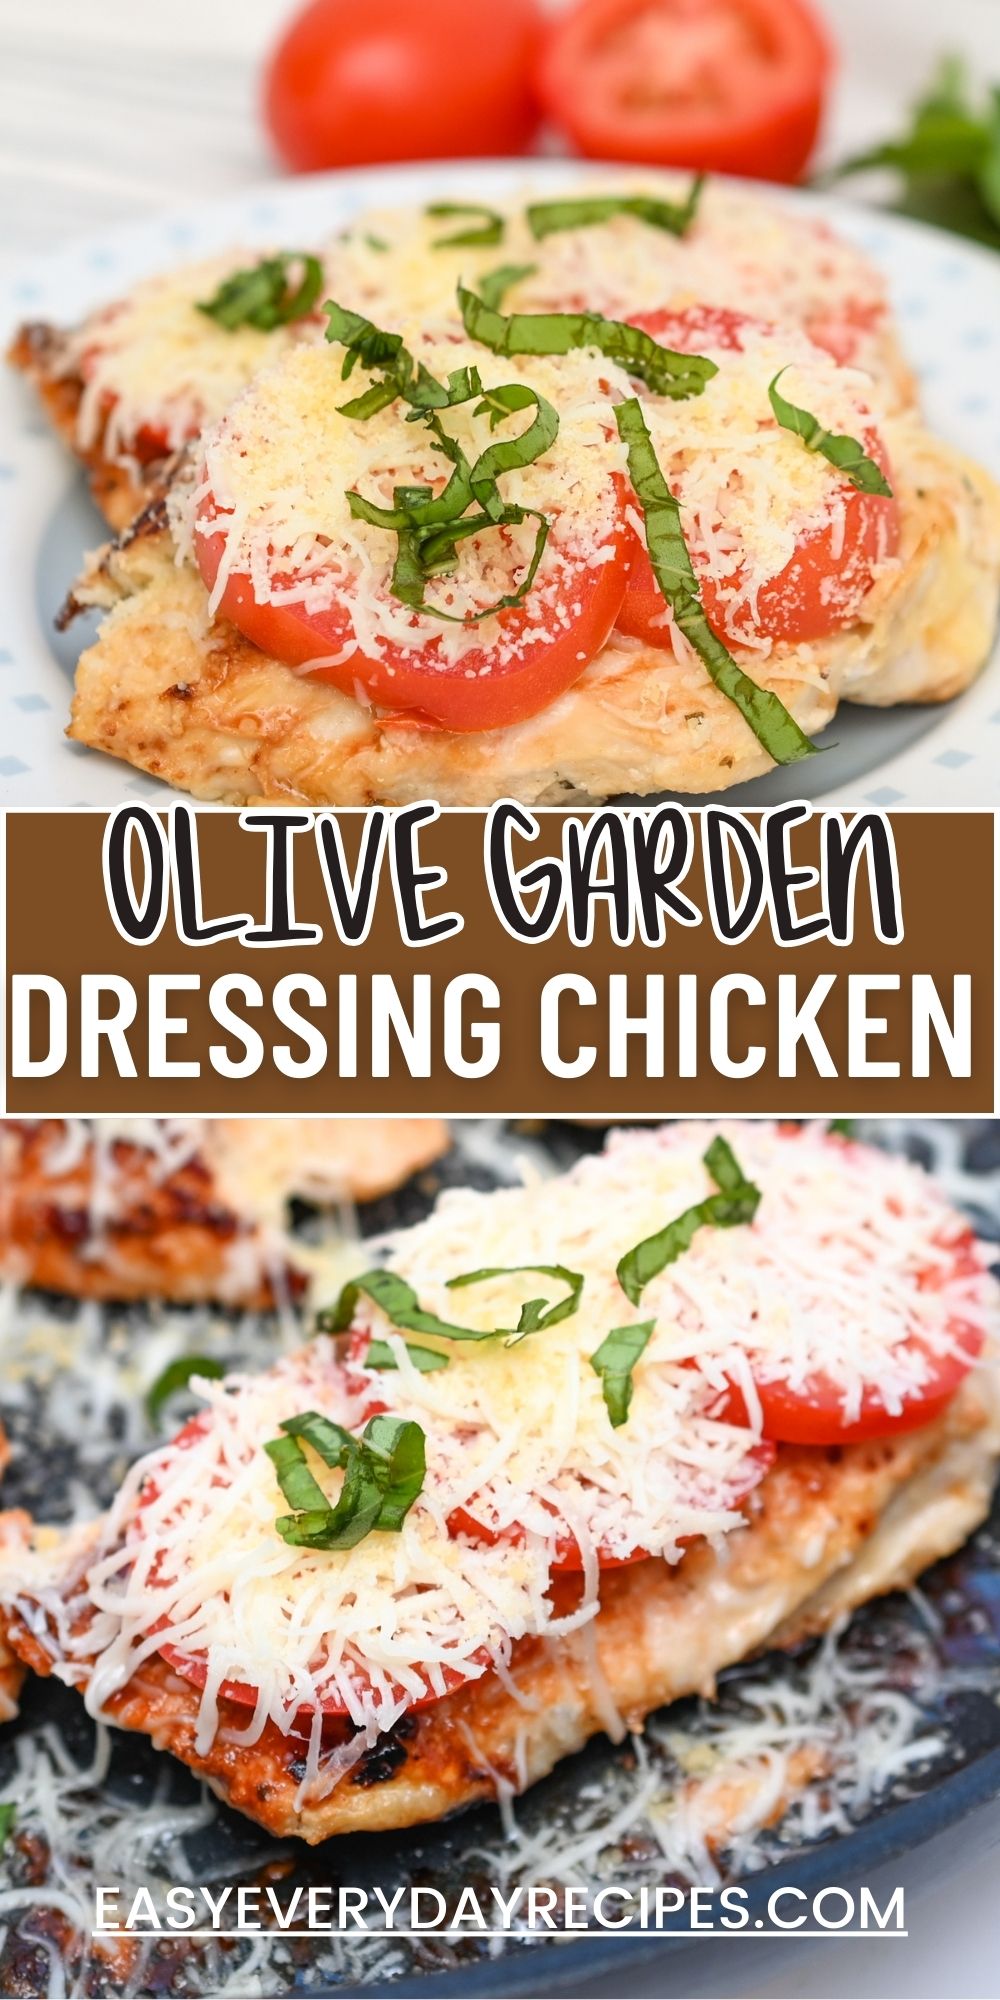 Olive garden dressing chicken on a plate.